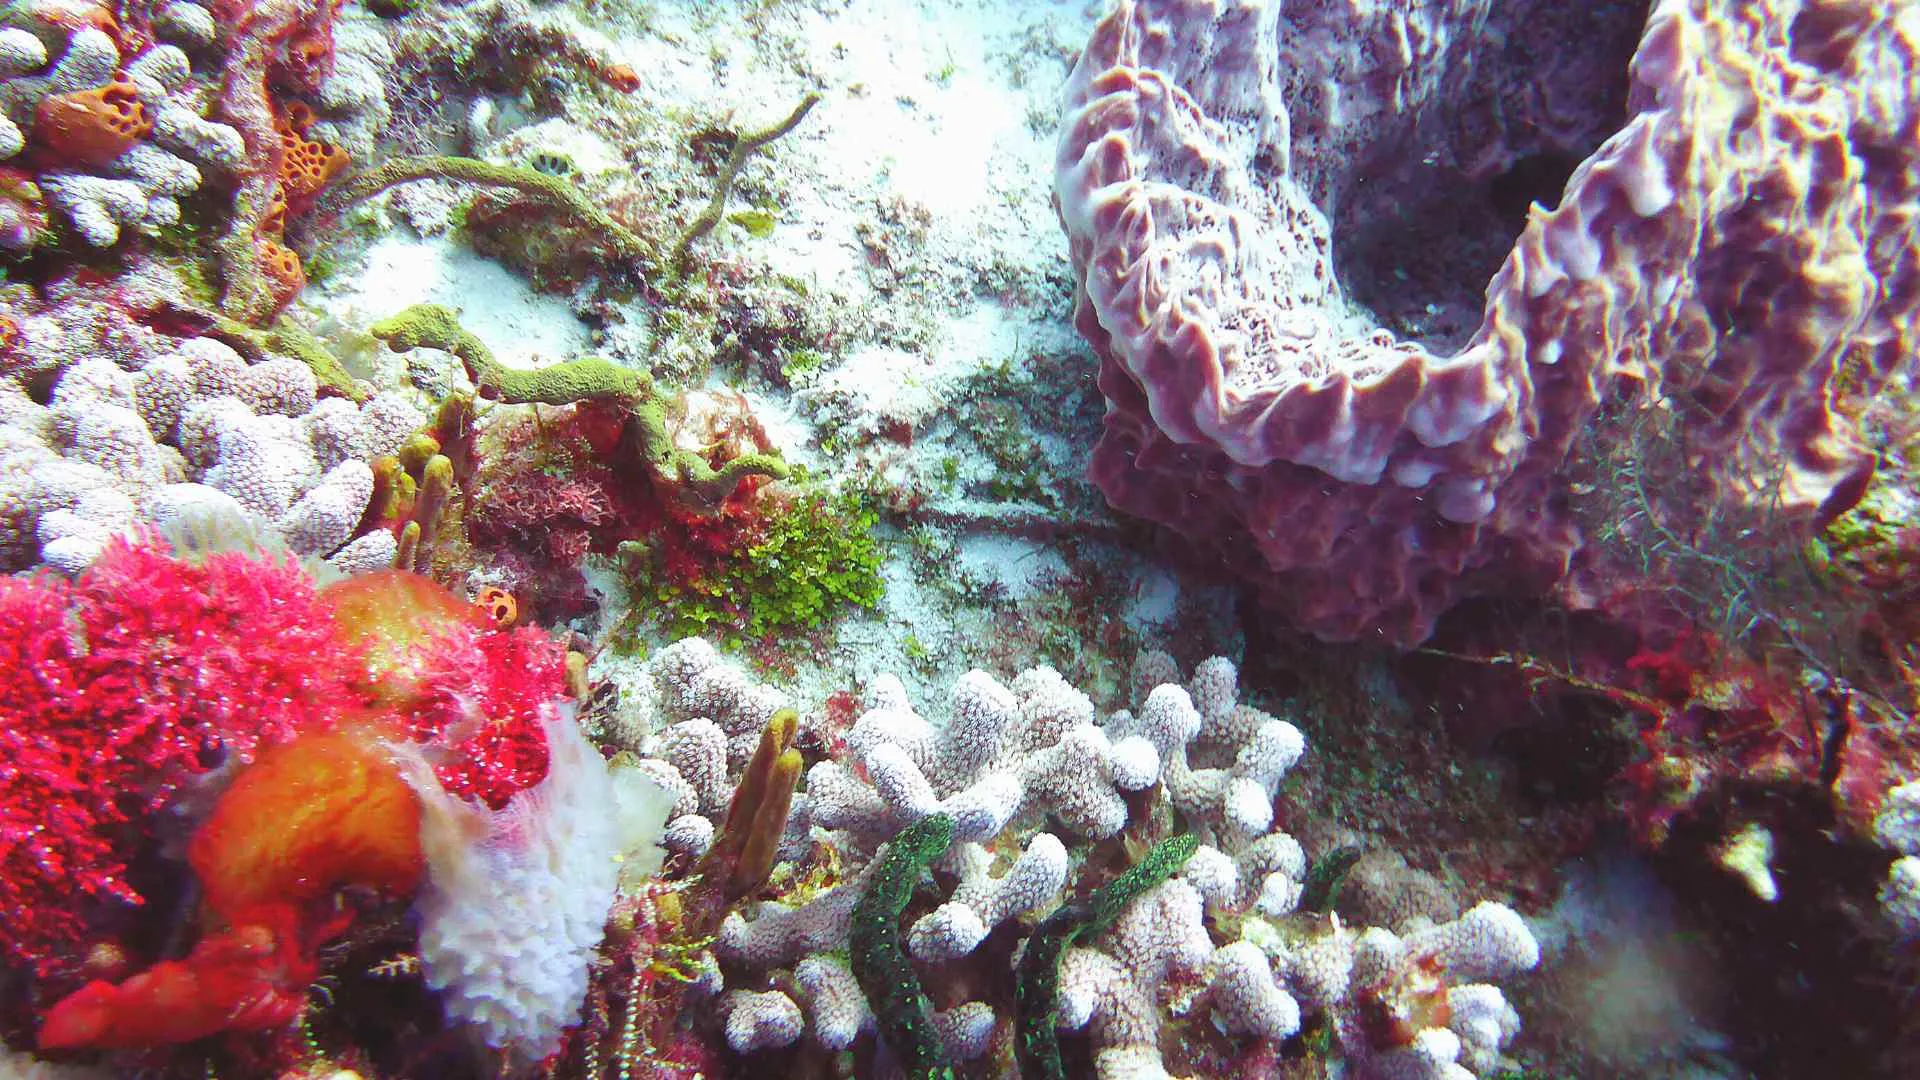 Dive Sites in Cozumel